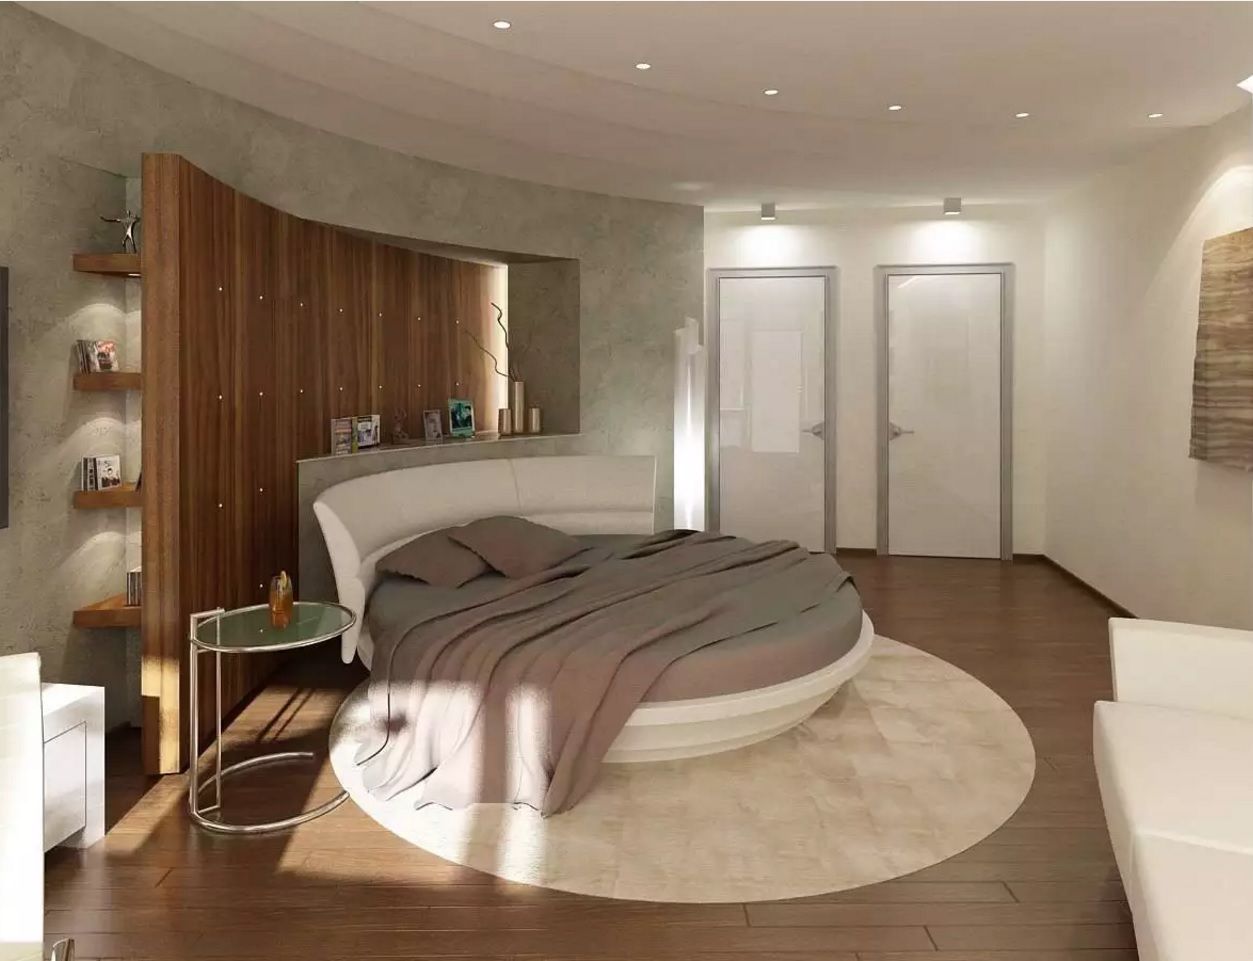 Circle Bed in Unique  Bedroom  Interior Design  Small 